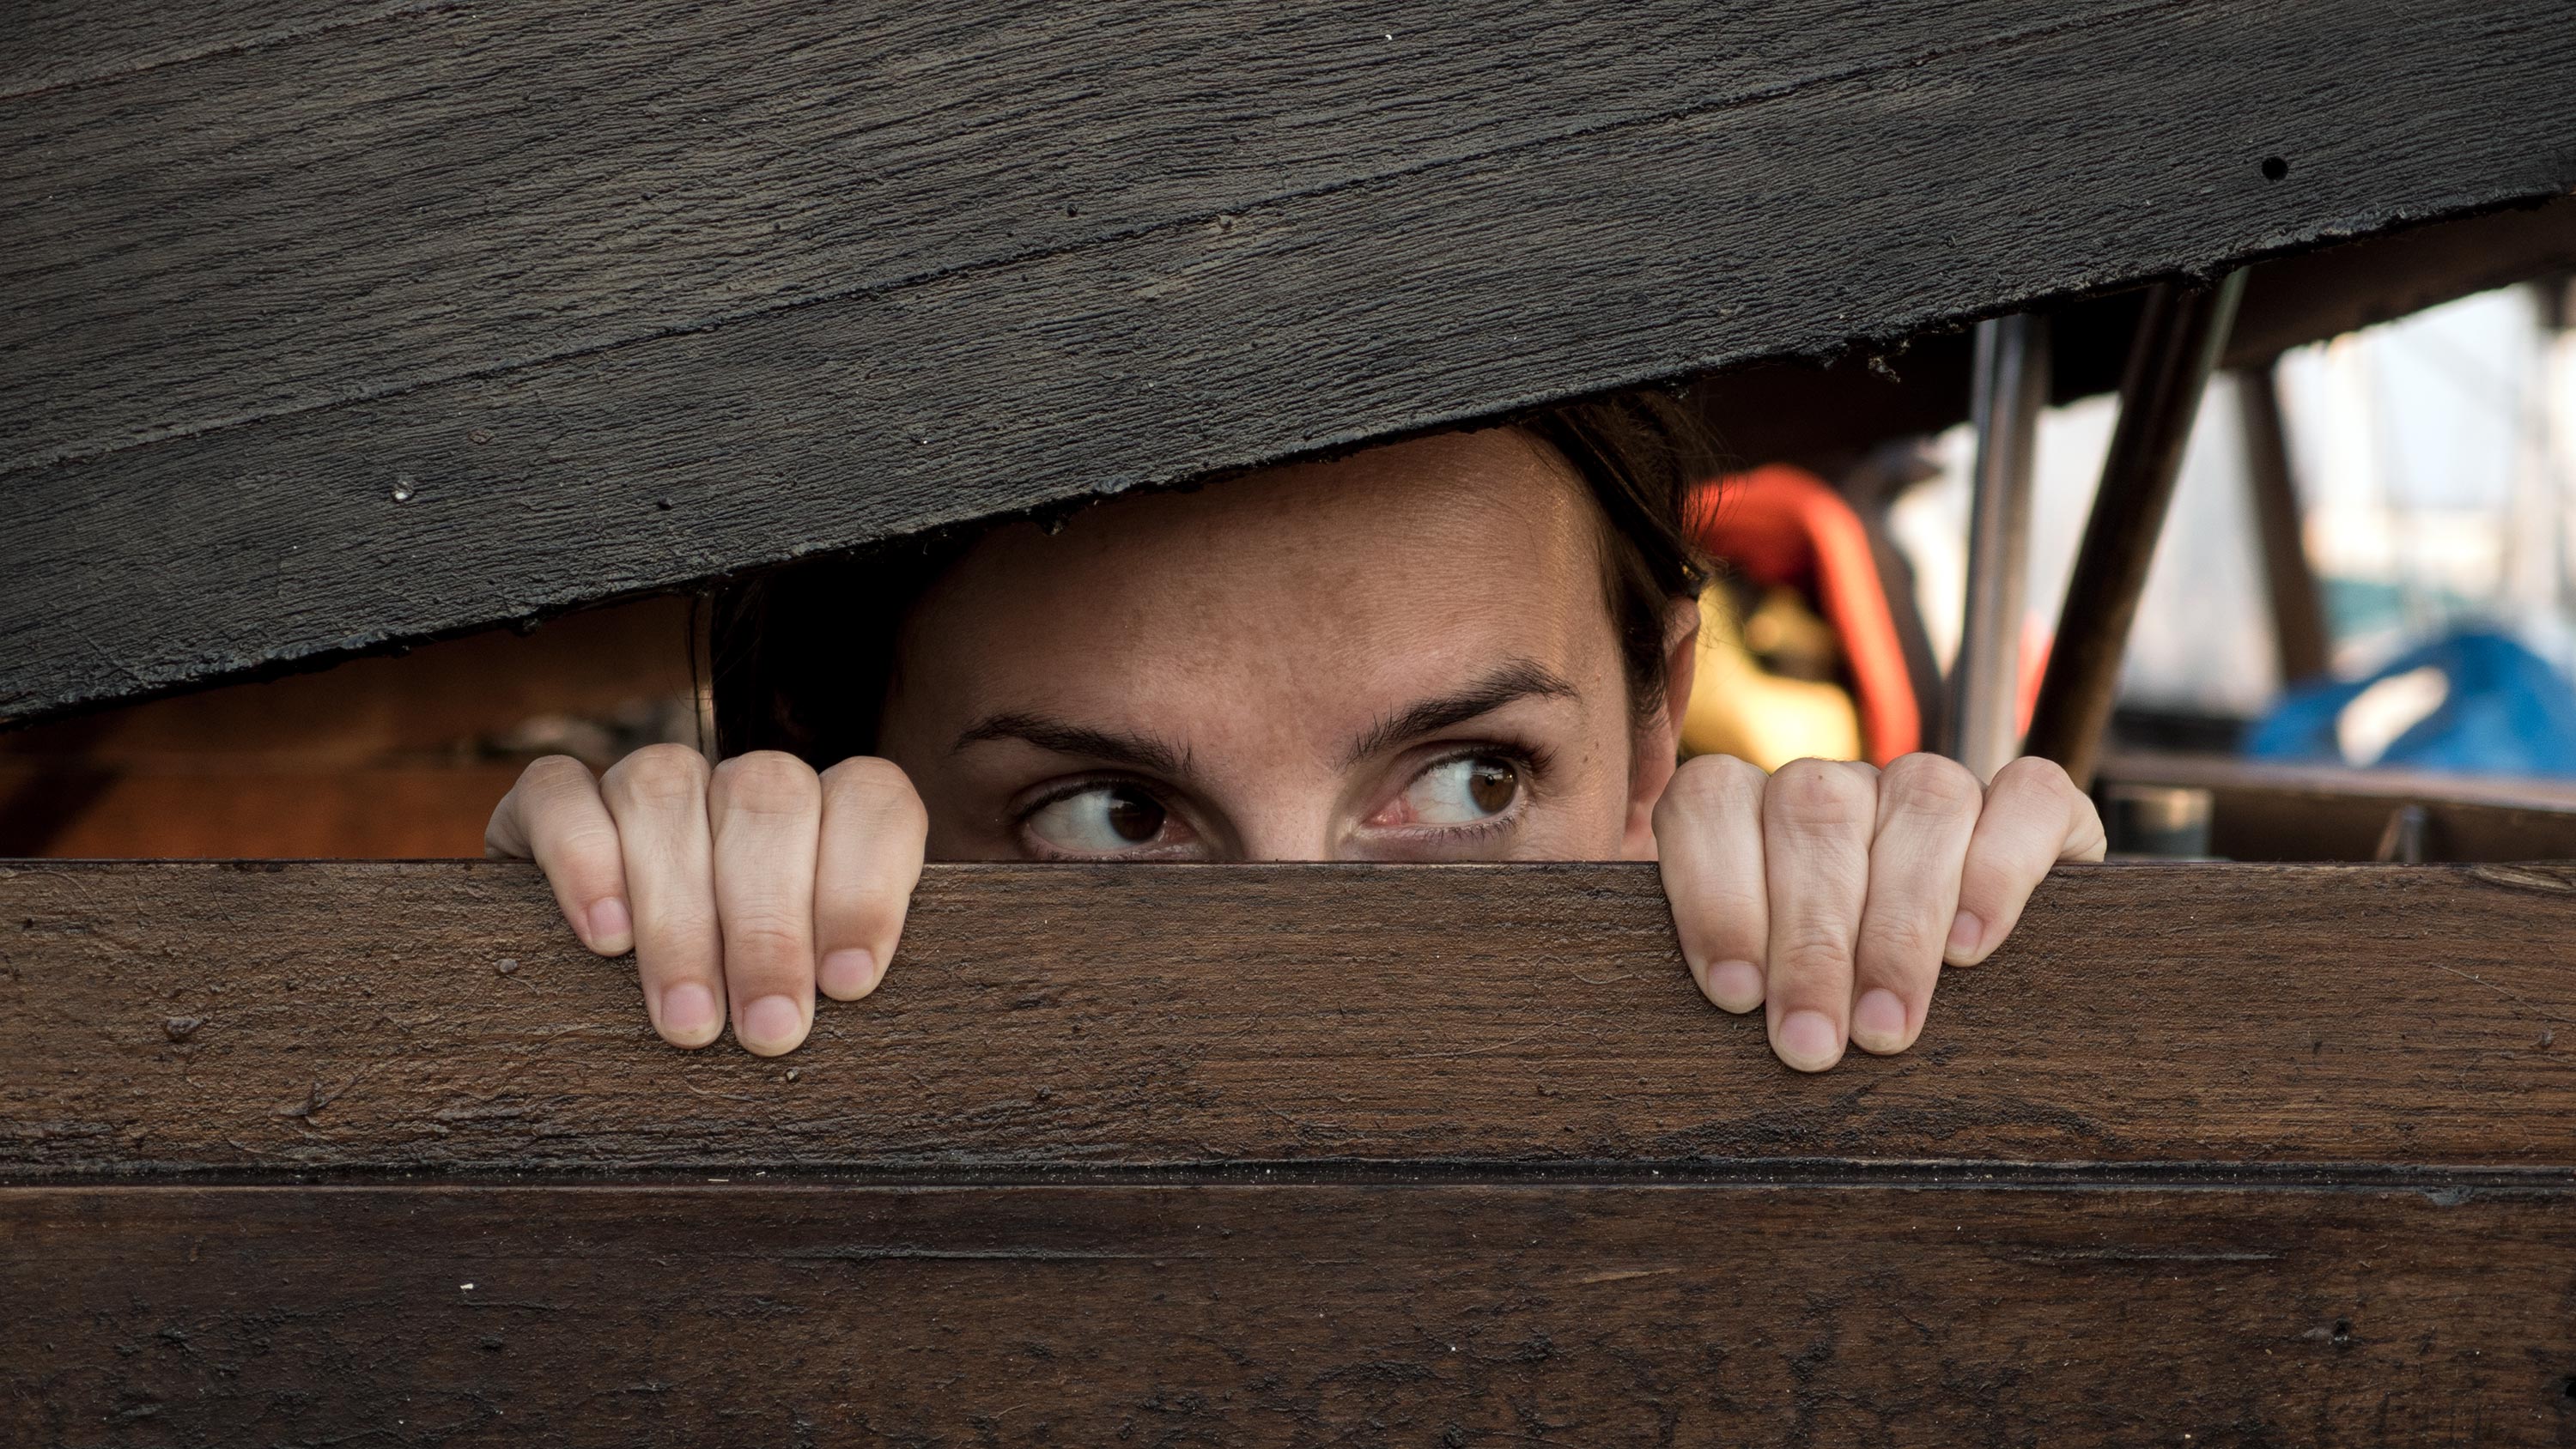 Free Image: Woman playing hide and seek | Libreshot Public Domain Photos